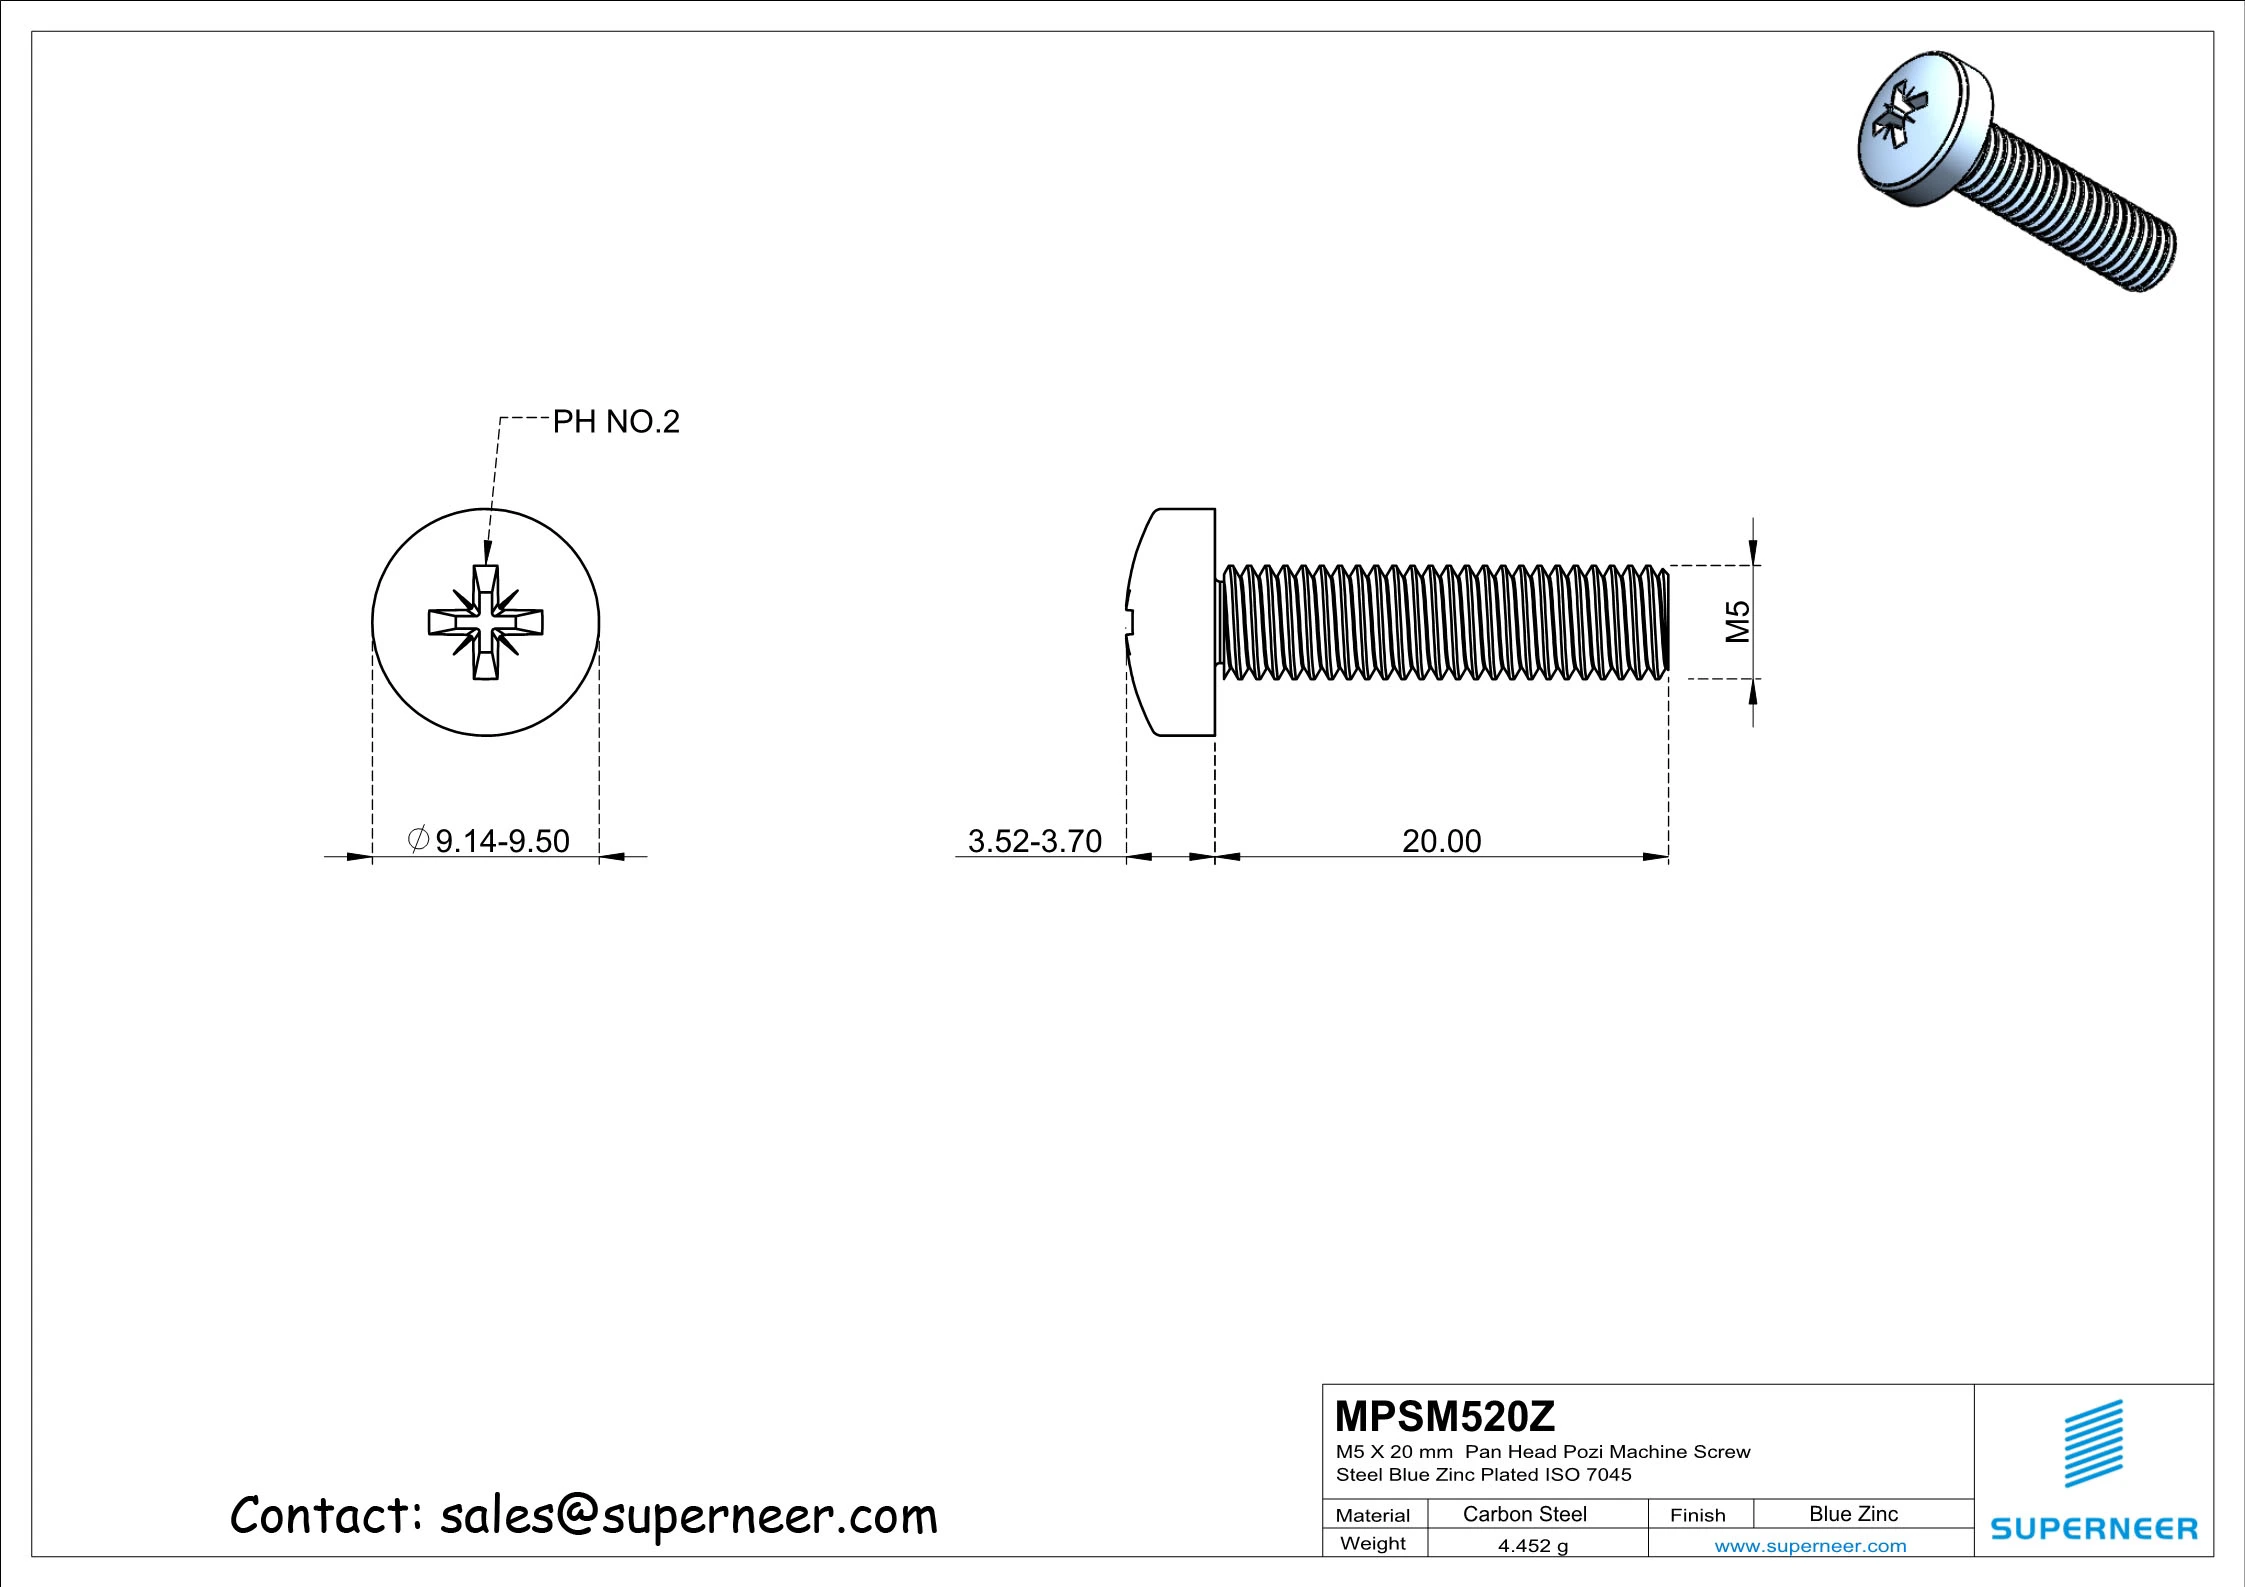 M5 x 20 mm Pan Head Pozi Machine Screw Steel Blue Zinc Plated ISO 7045